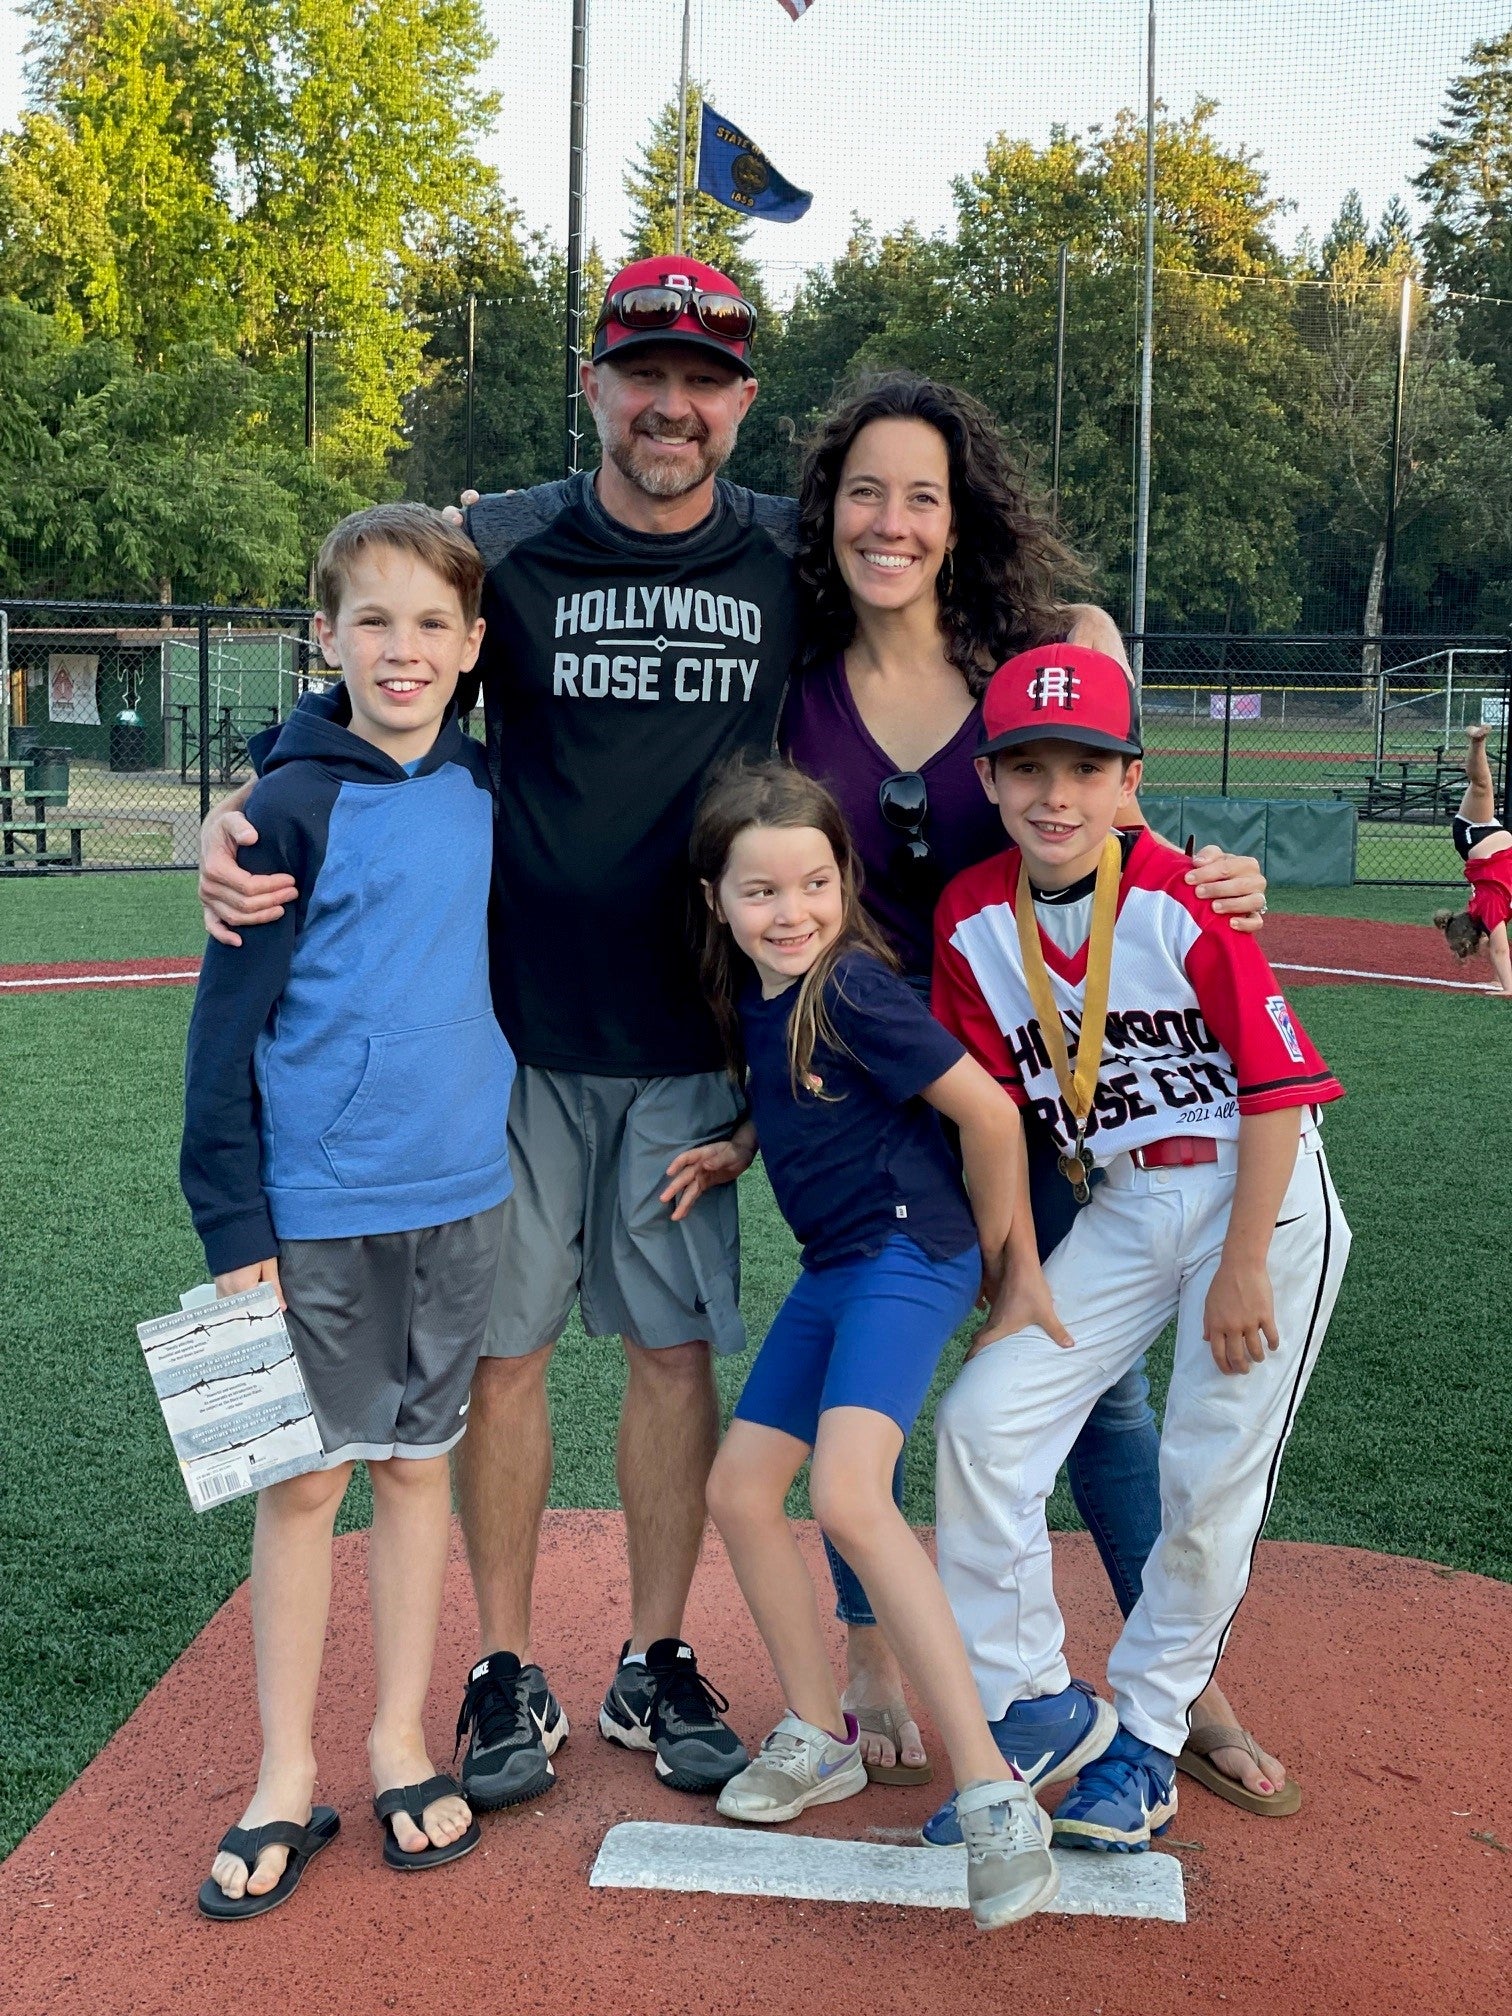 Jodi and her family at the 10U Oregon Baseball Championship